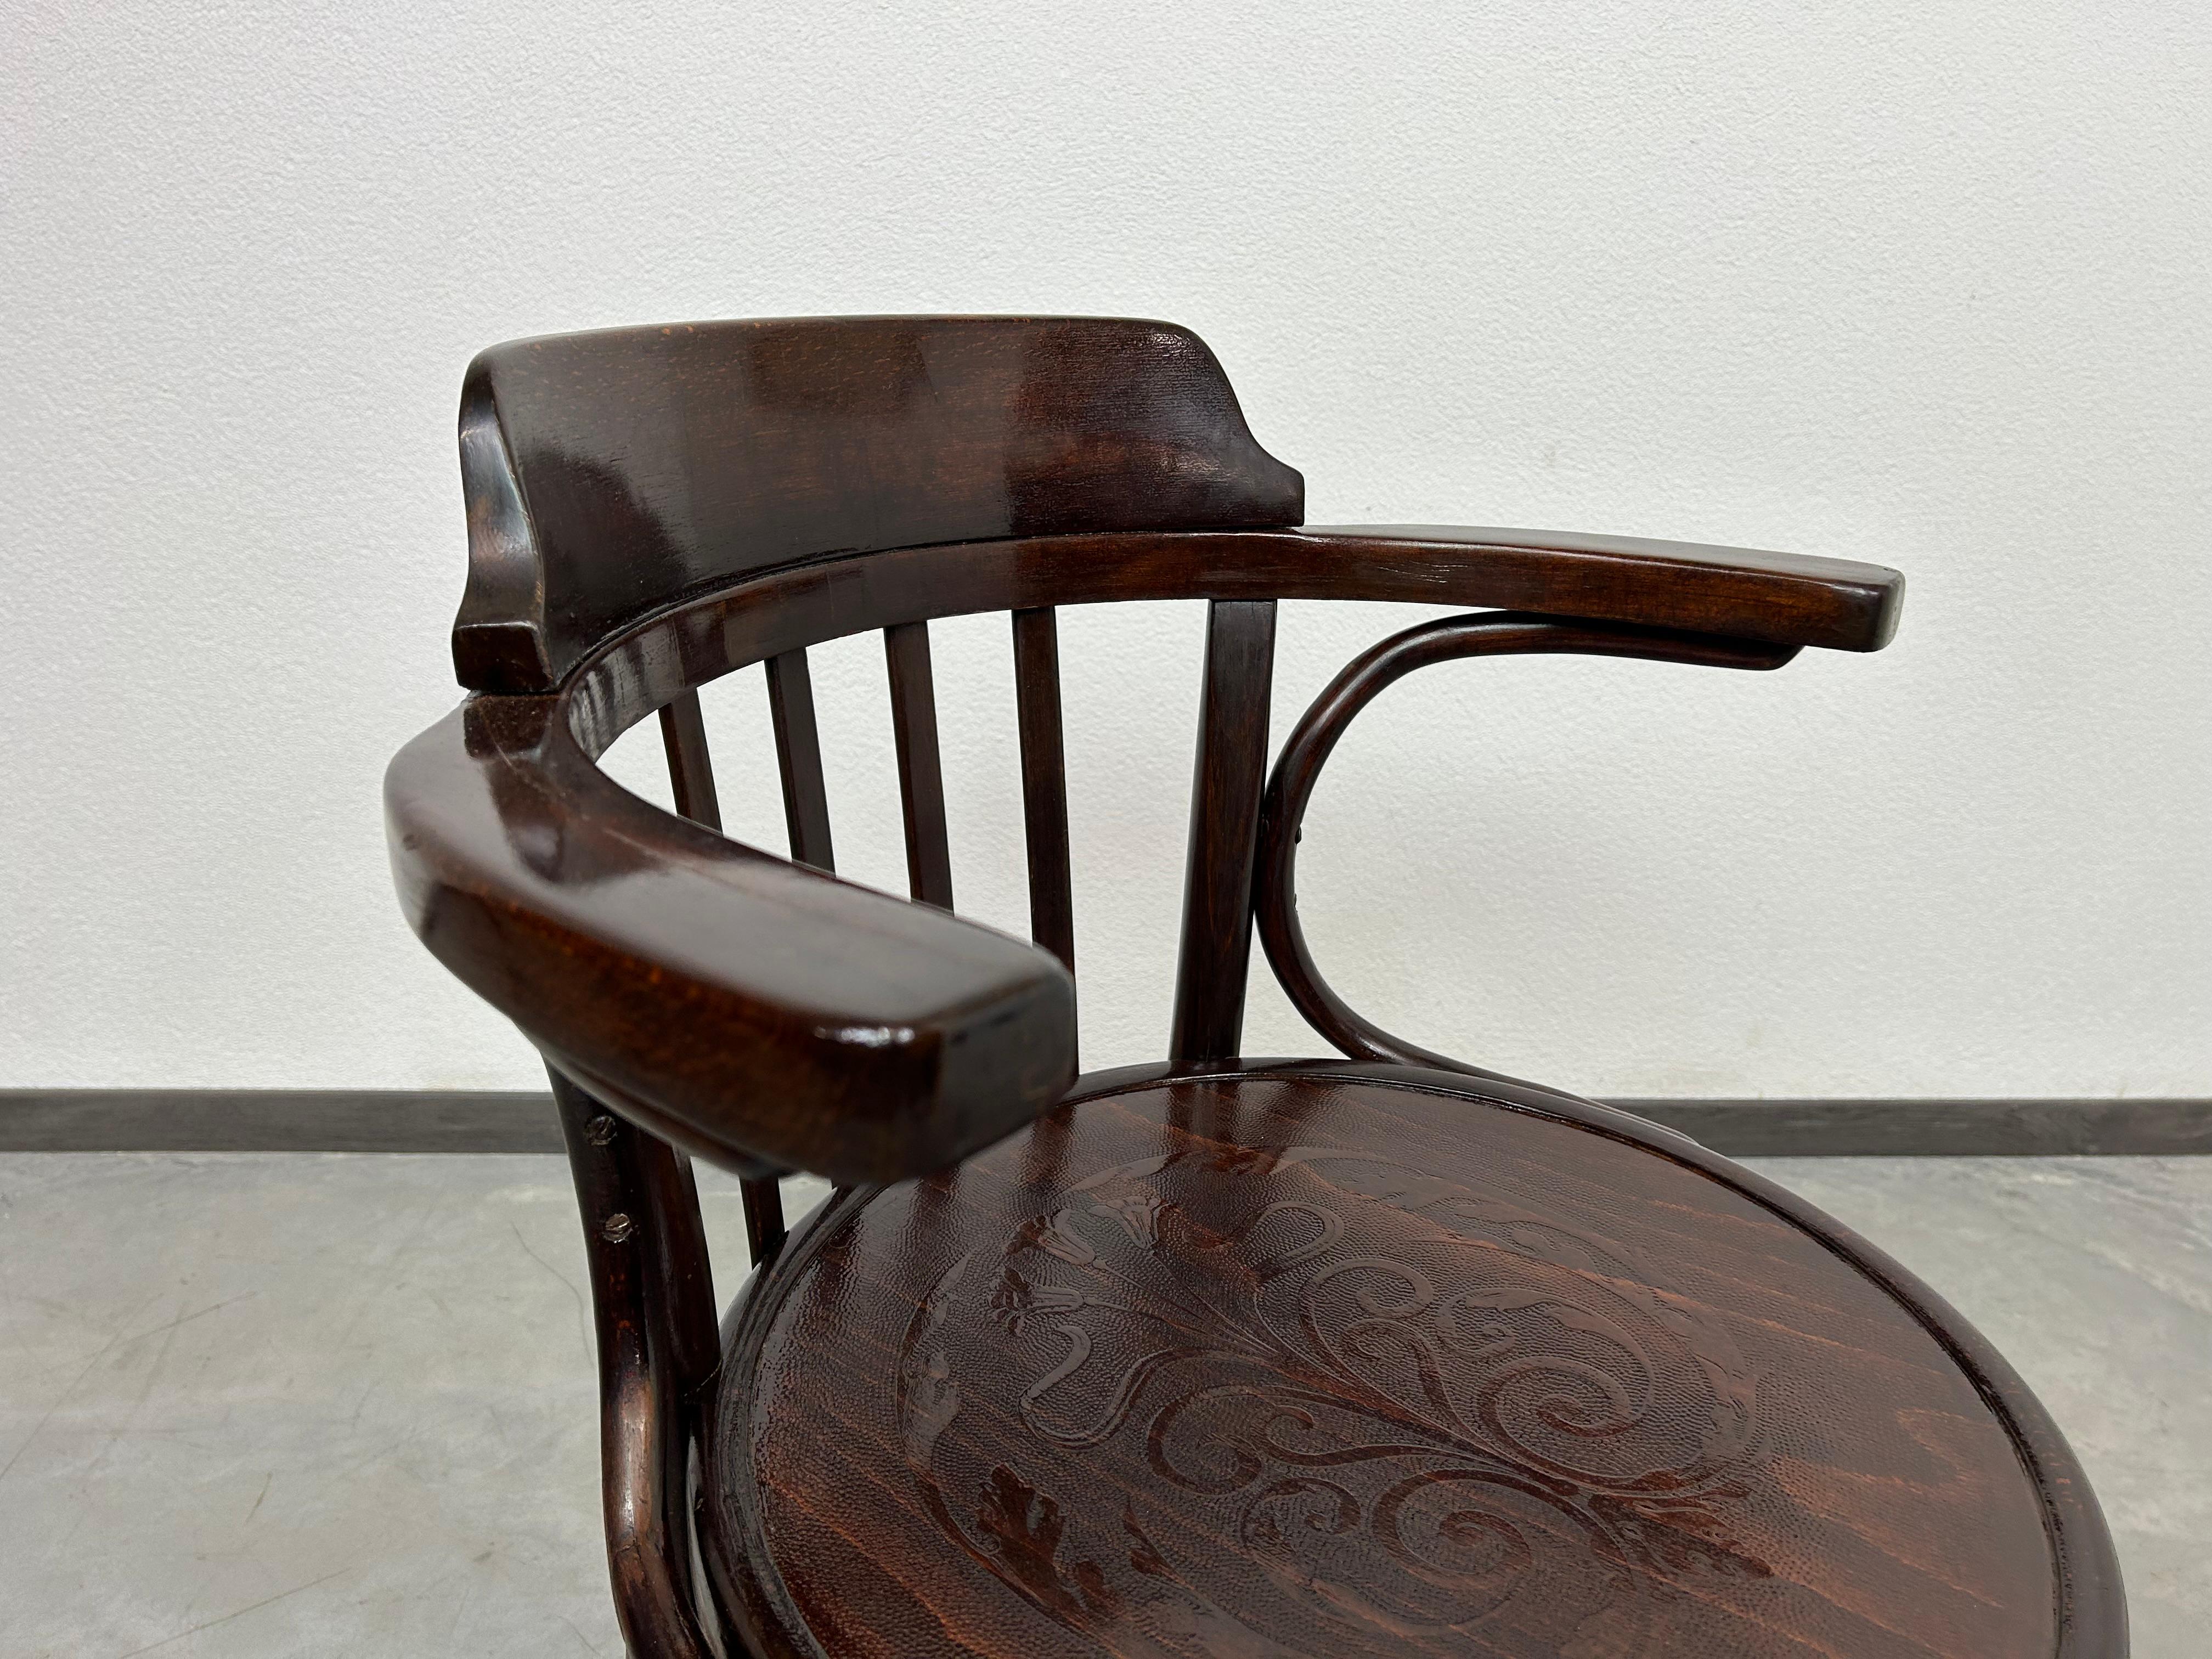 Beech Jugendstil desk chair by Thonet